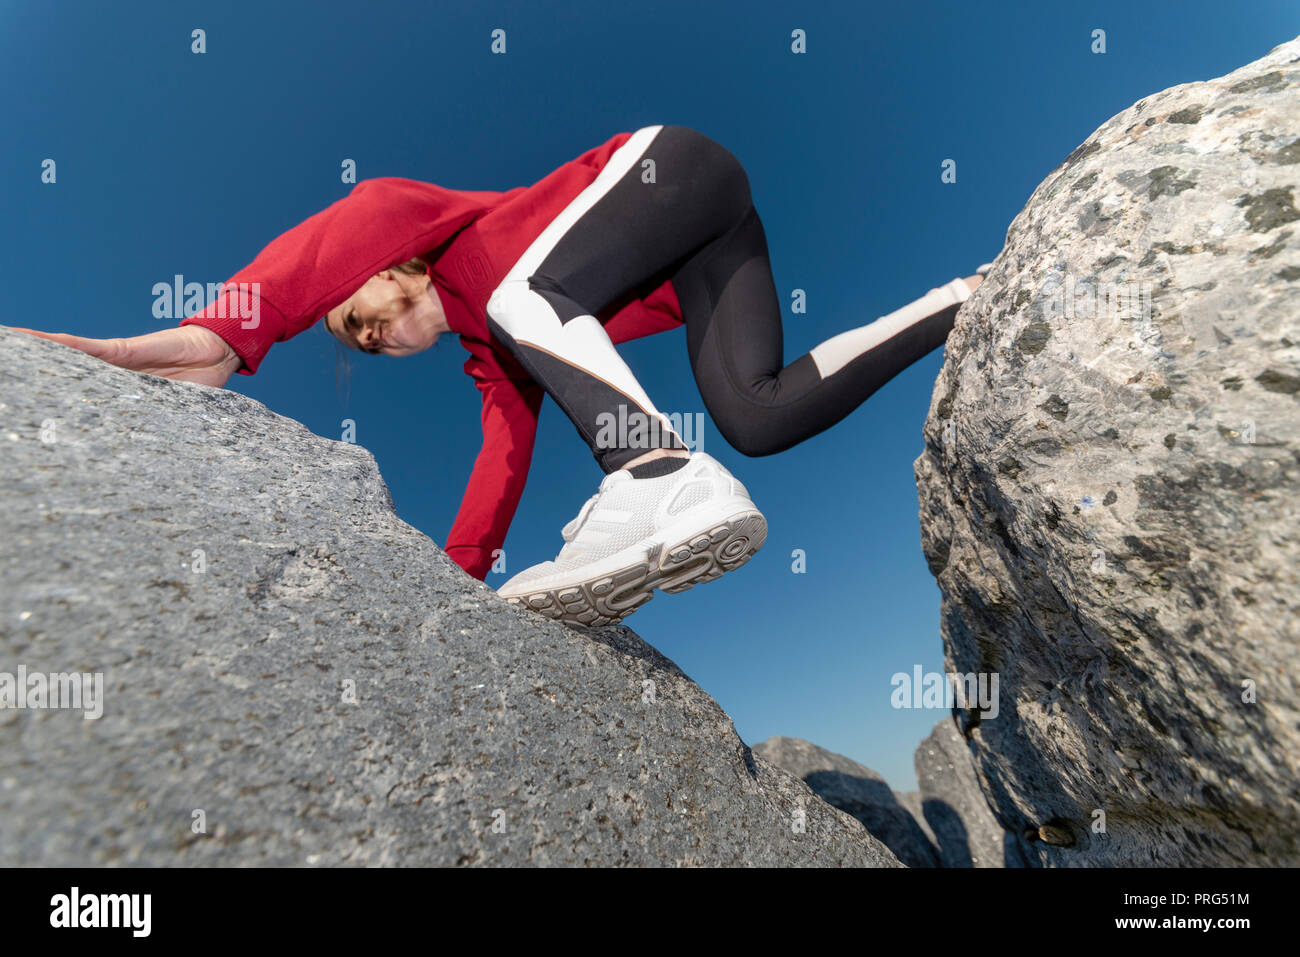 woman clambering across rocks, bouldering. Stock Photo